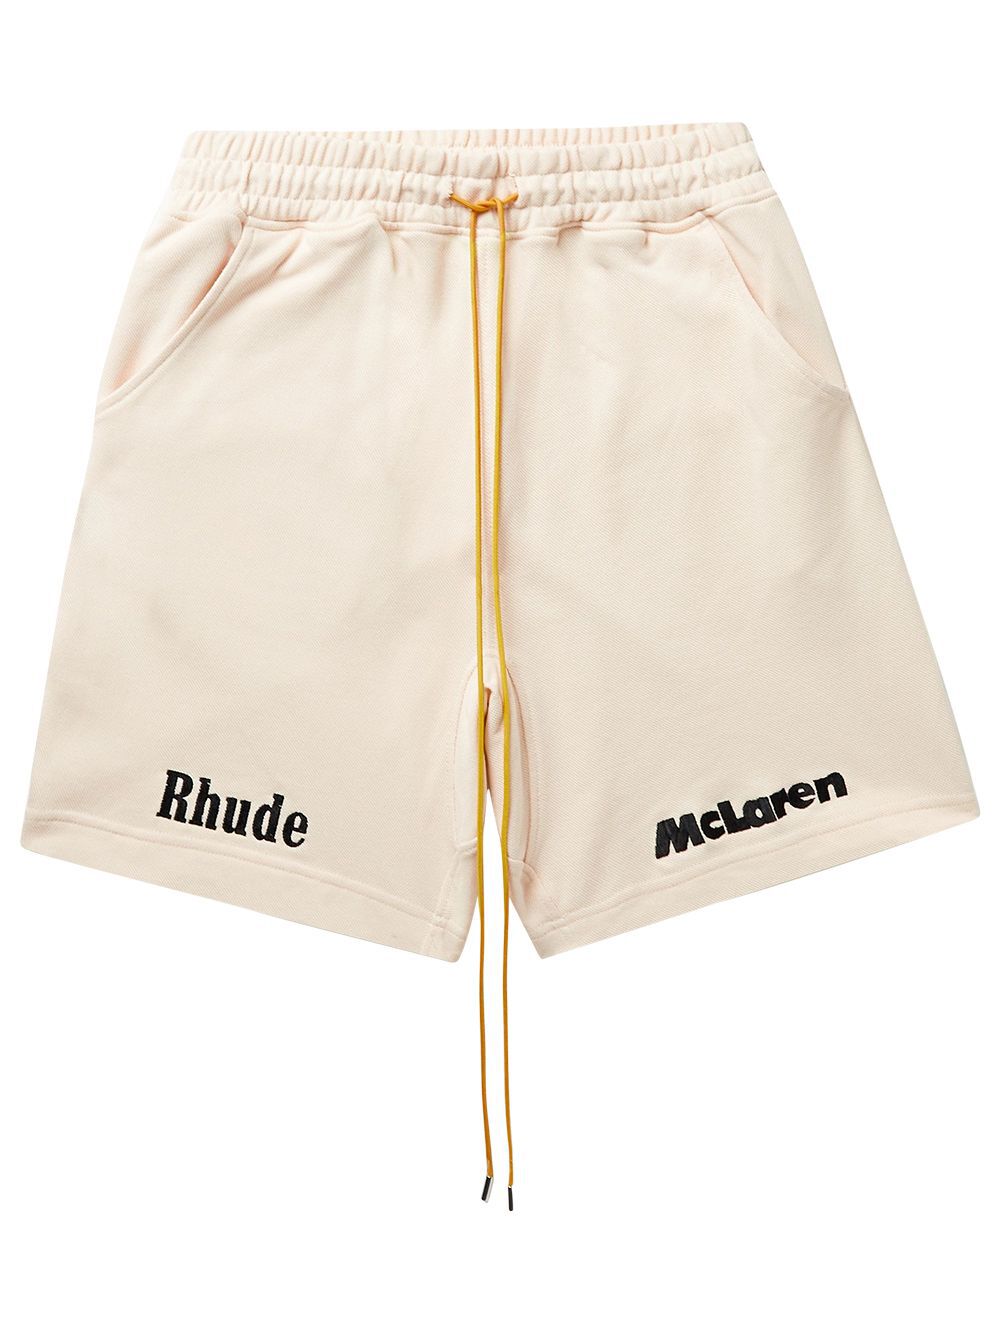 Where to Buy Rhude Shorts